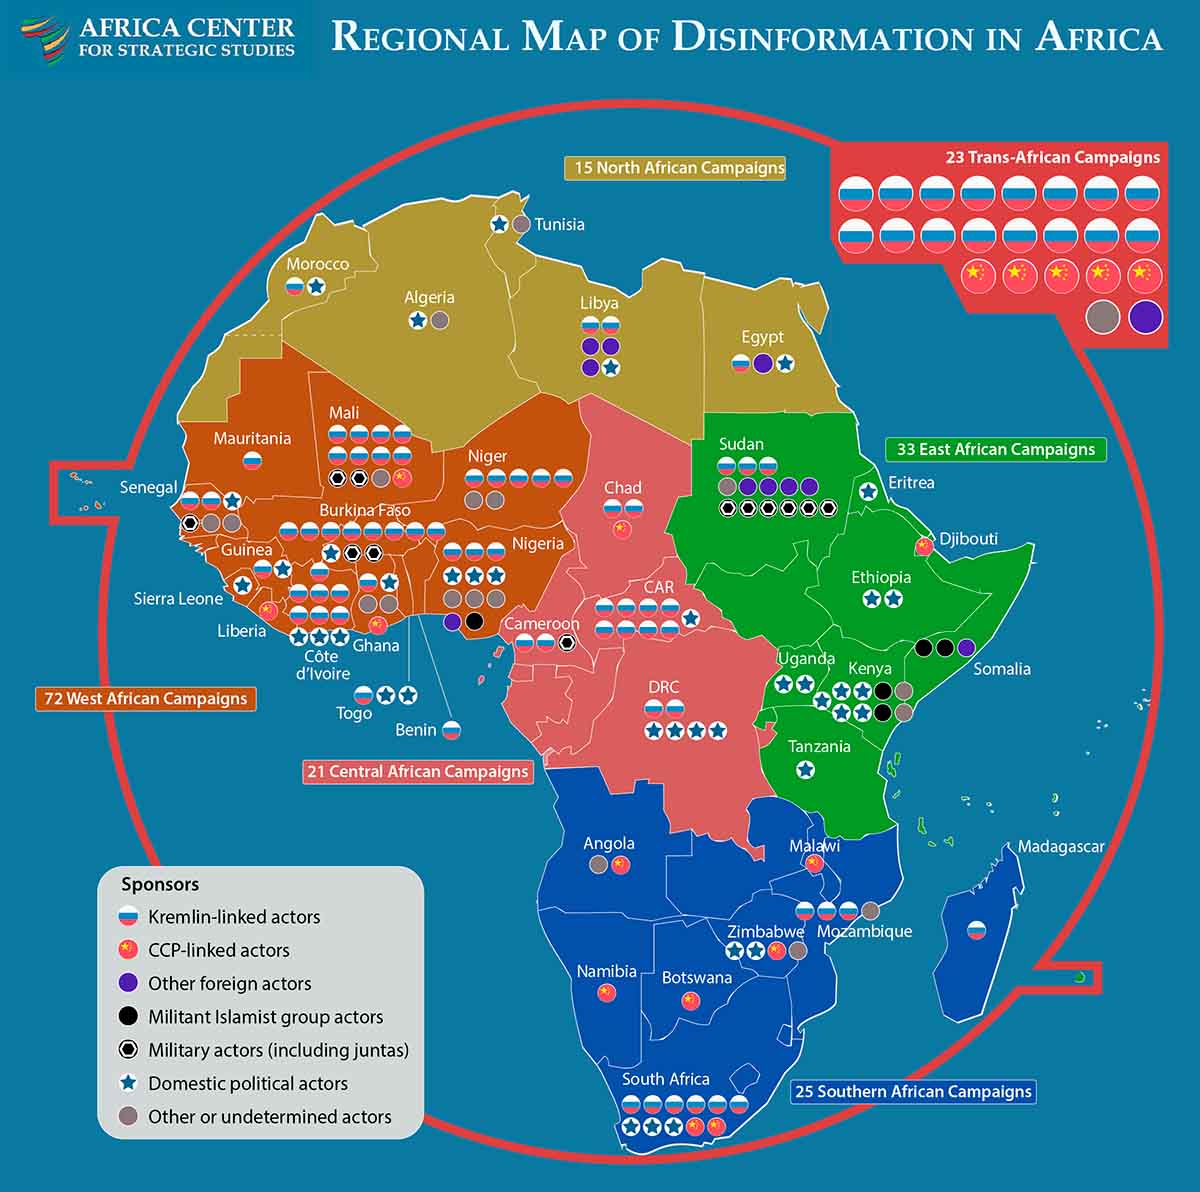 Figure 1. Regional map of disinformation in Africa